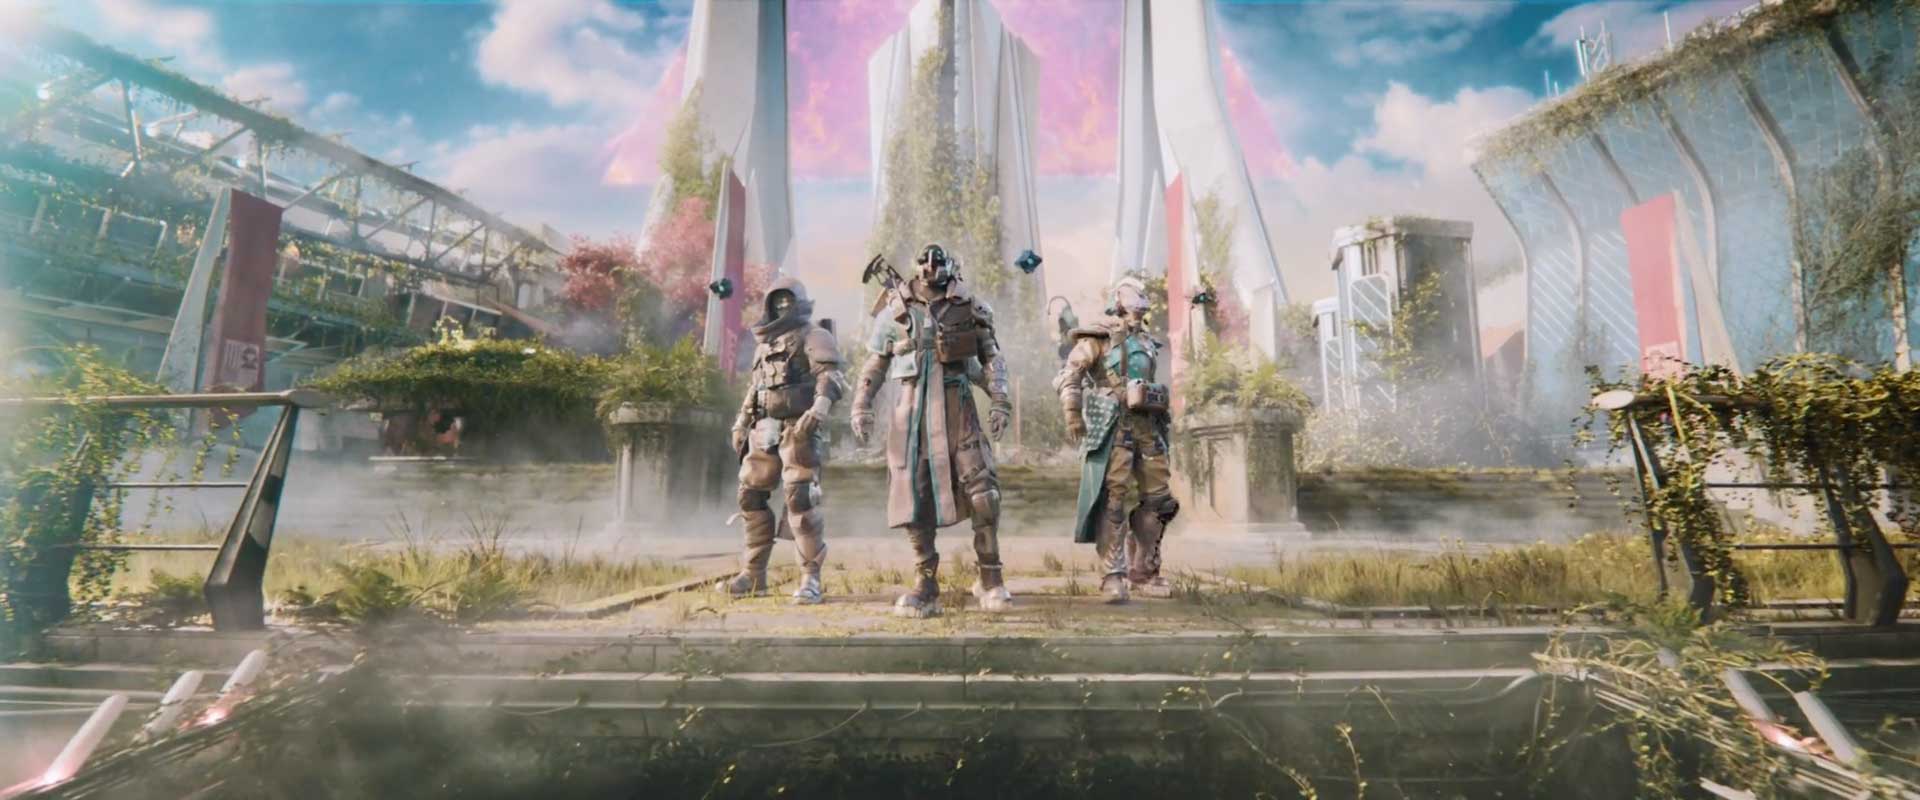 Destiny 2 The Final Shape Reveal Trailer Ilya Abulkhanov The Mill | STASH MAGAZINE